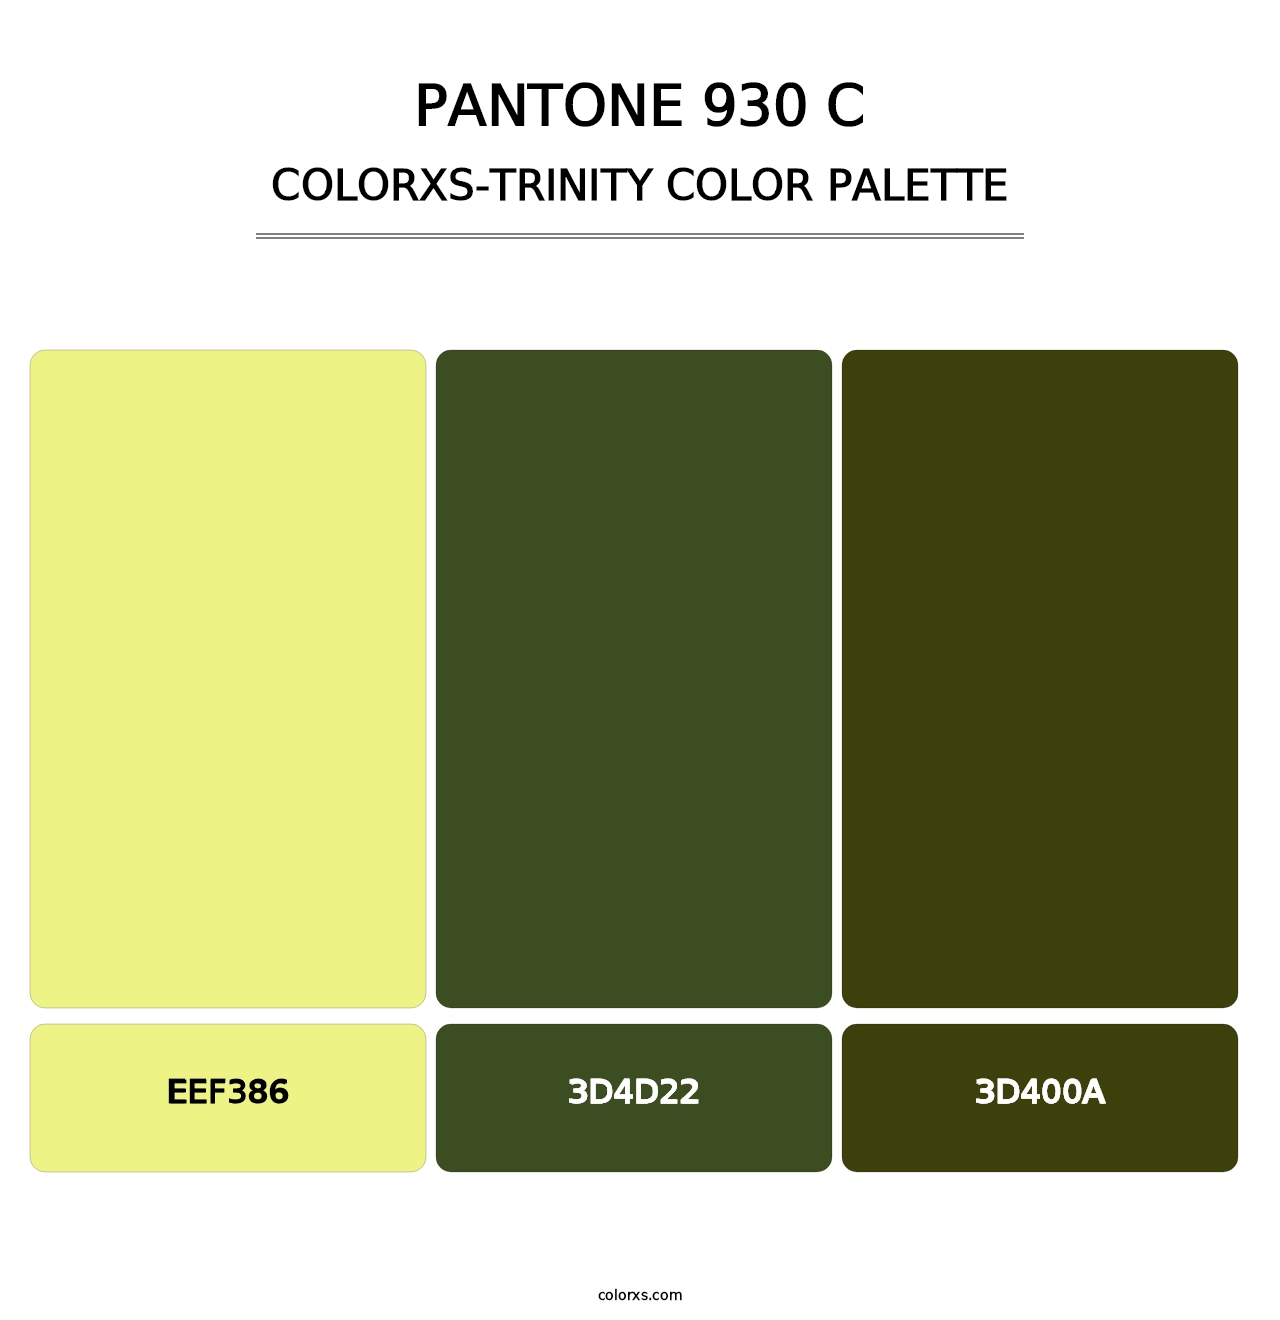 PANTONE 930 C - Colorxs Trinity Palette